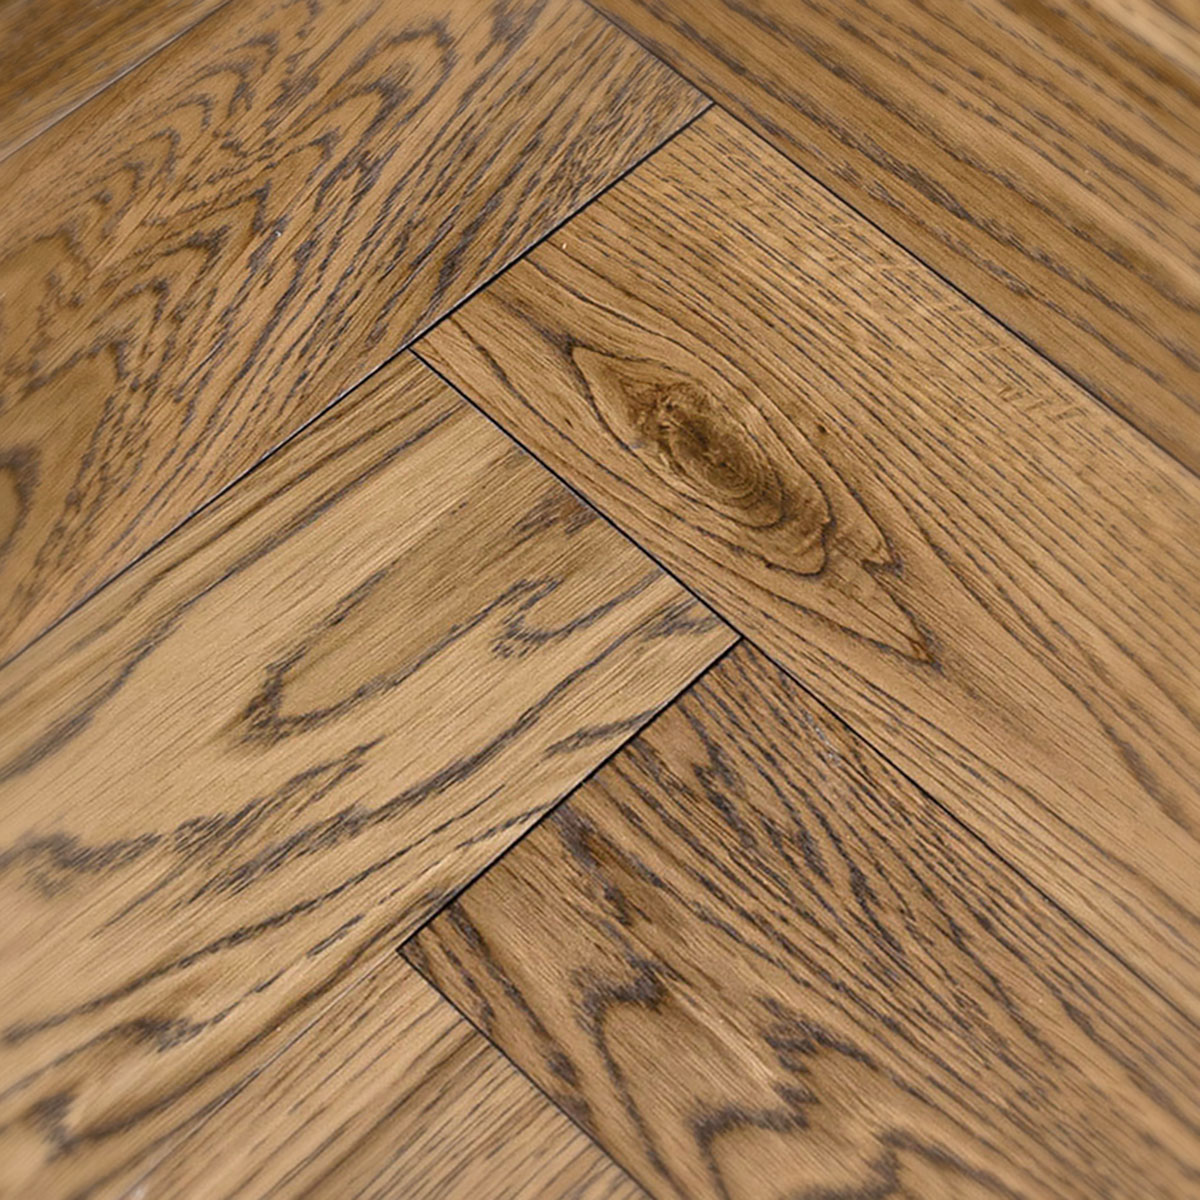 Roslin Grove Herringbone - Golden Oak Wood Floor